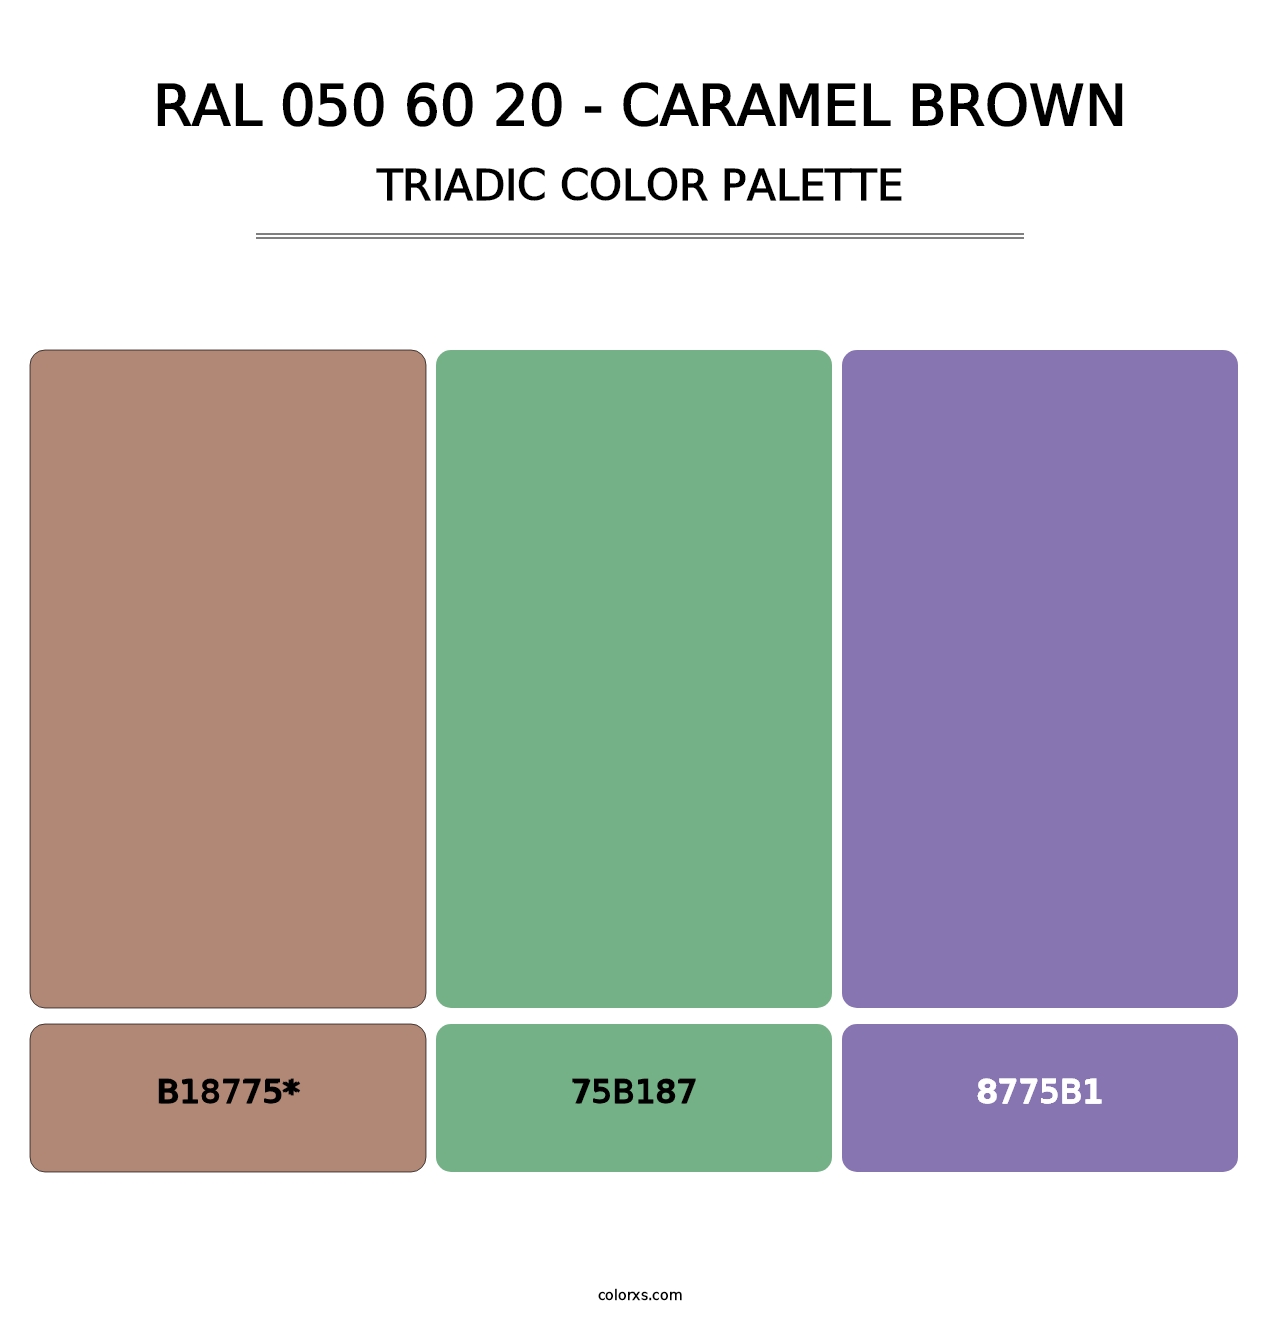 RAL 050 60 20 - Caramel Brown - Triadic Color Palette